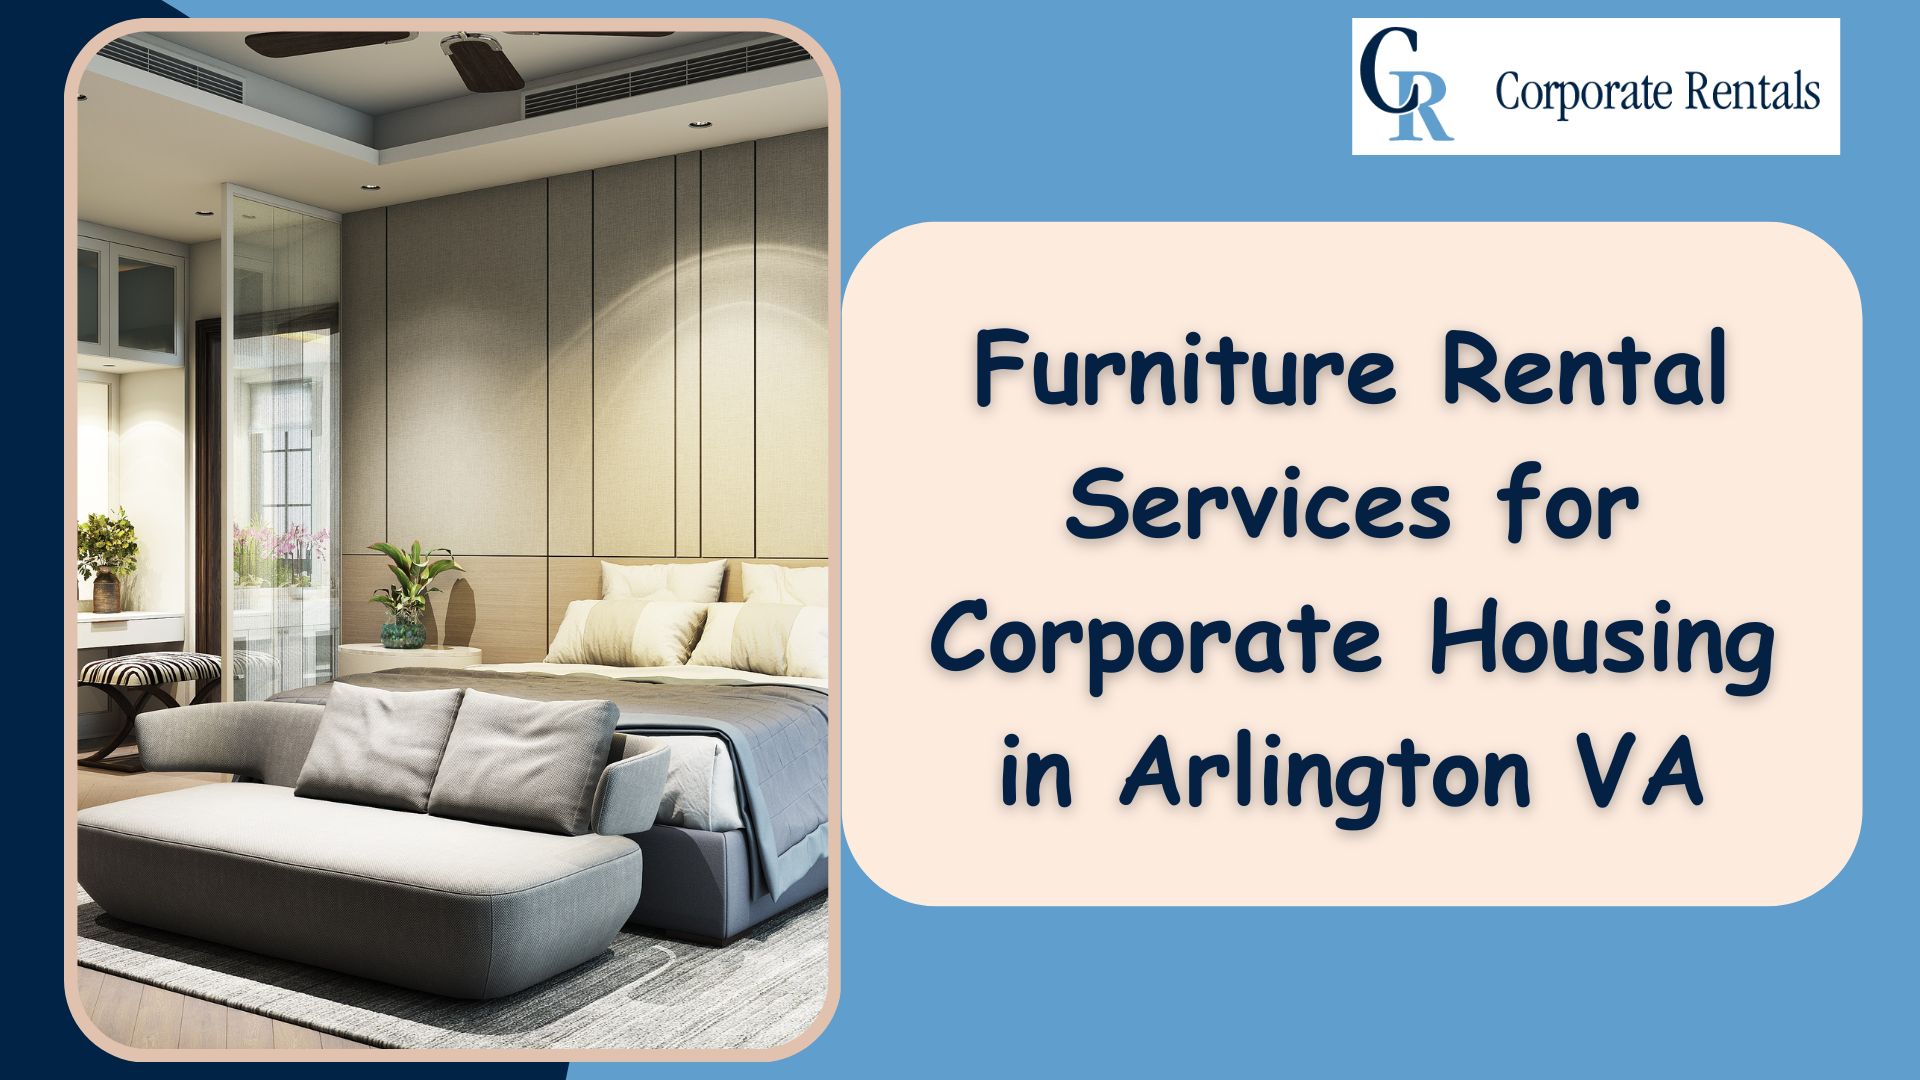 Furniture Rental Services for Corporate Housing in Arlington VA